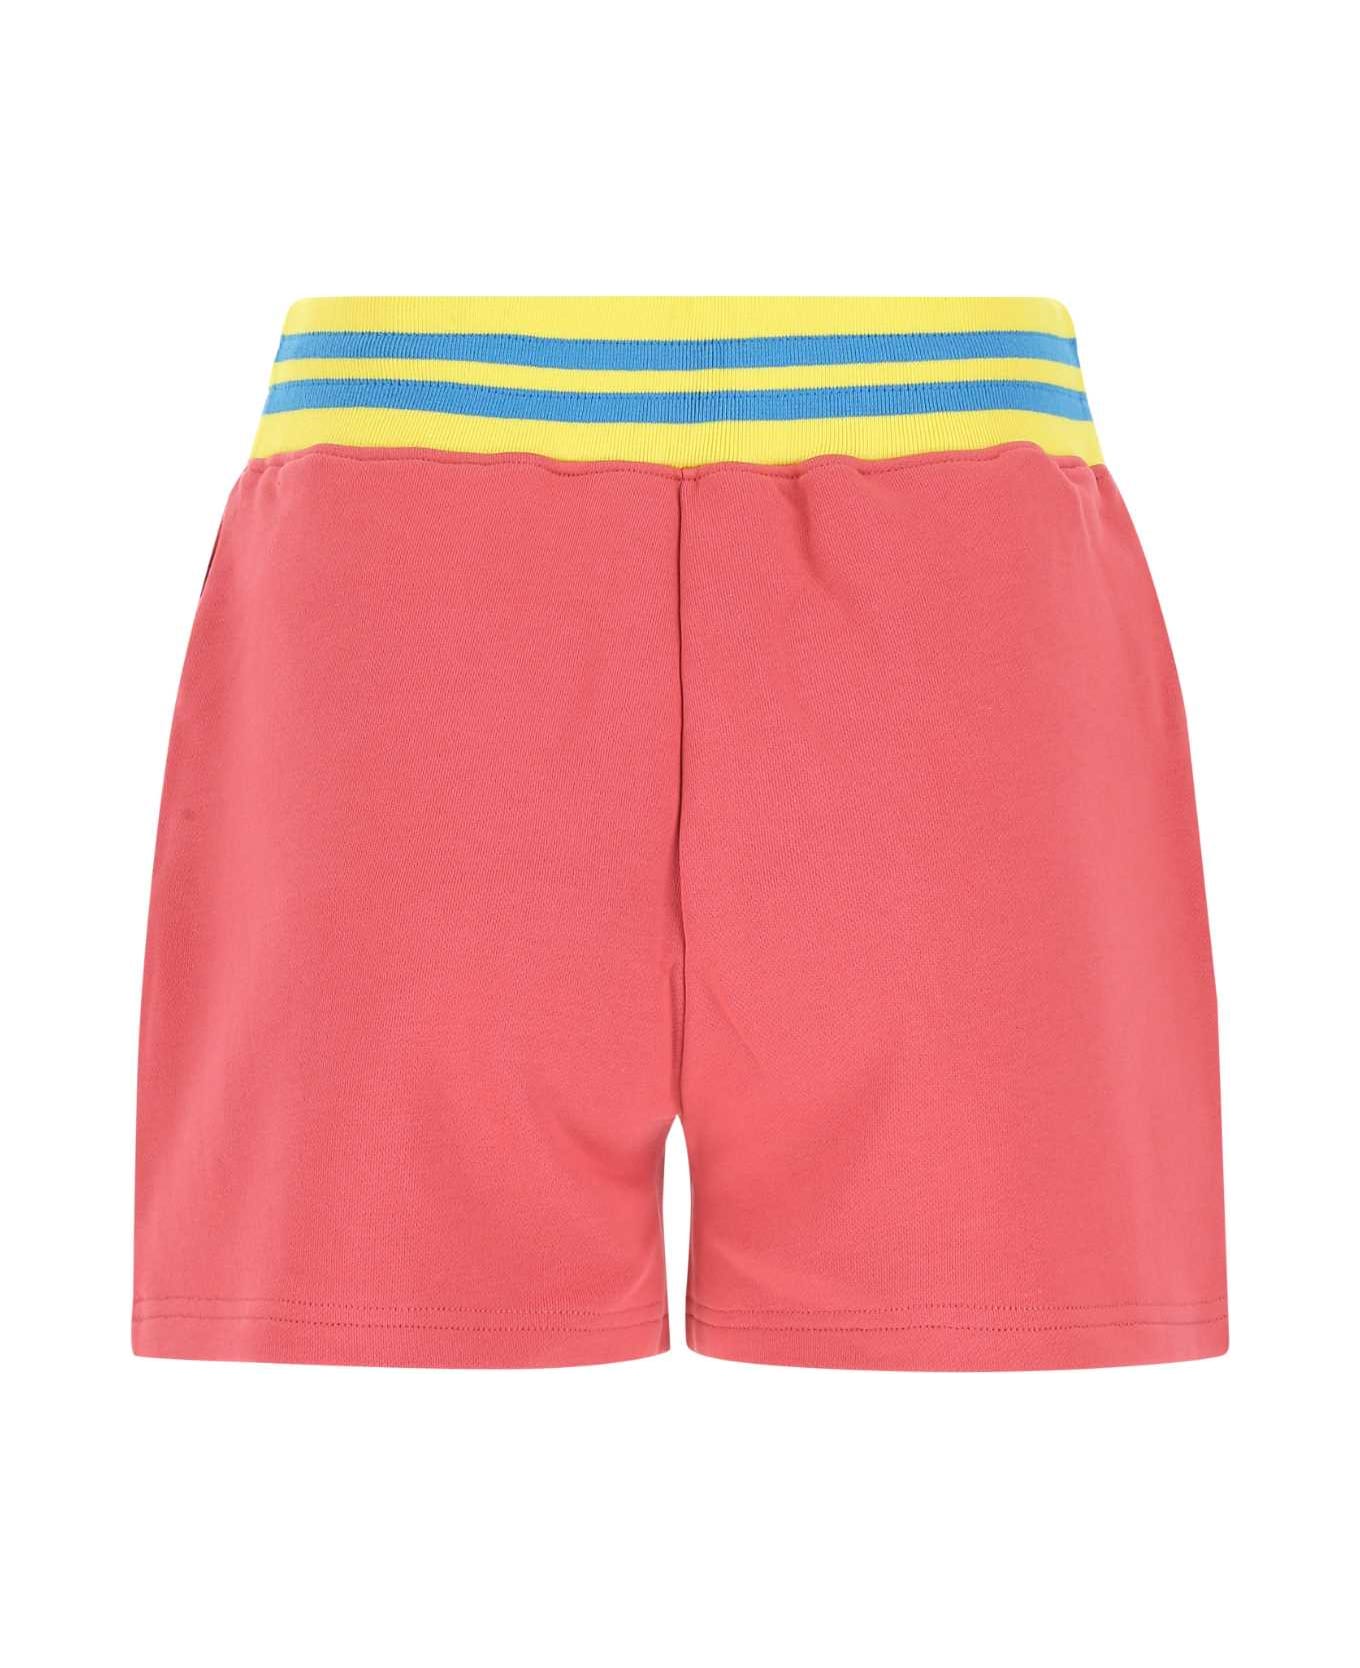 Moschino Pink Cotton Shorts - 1206